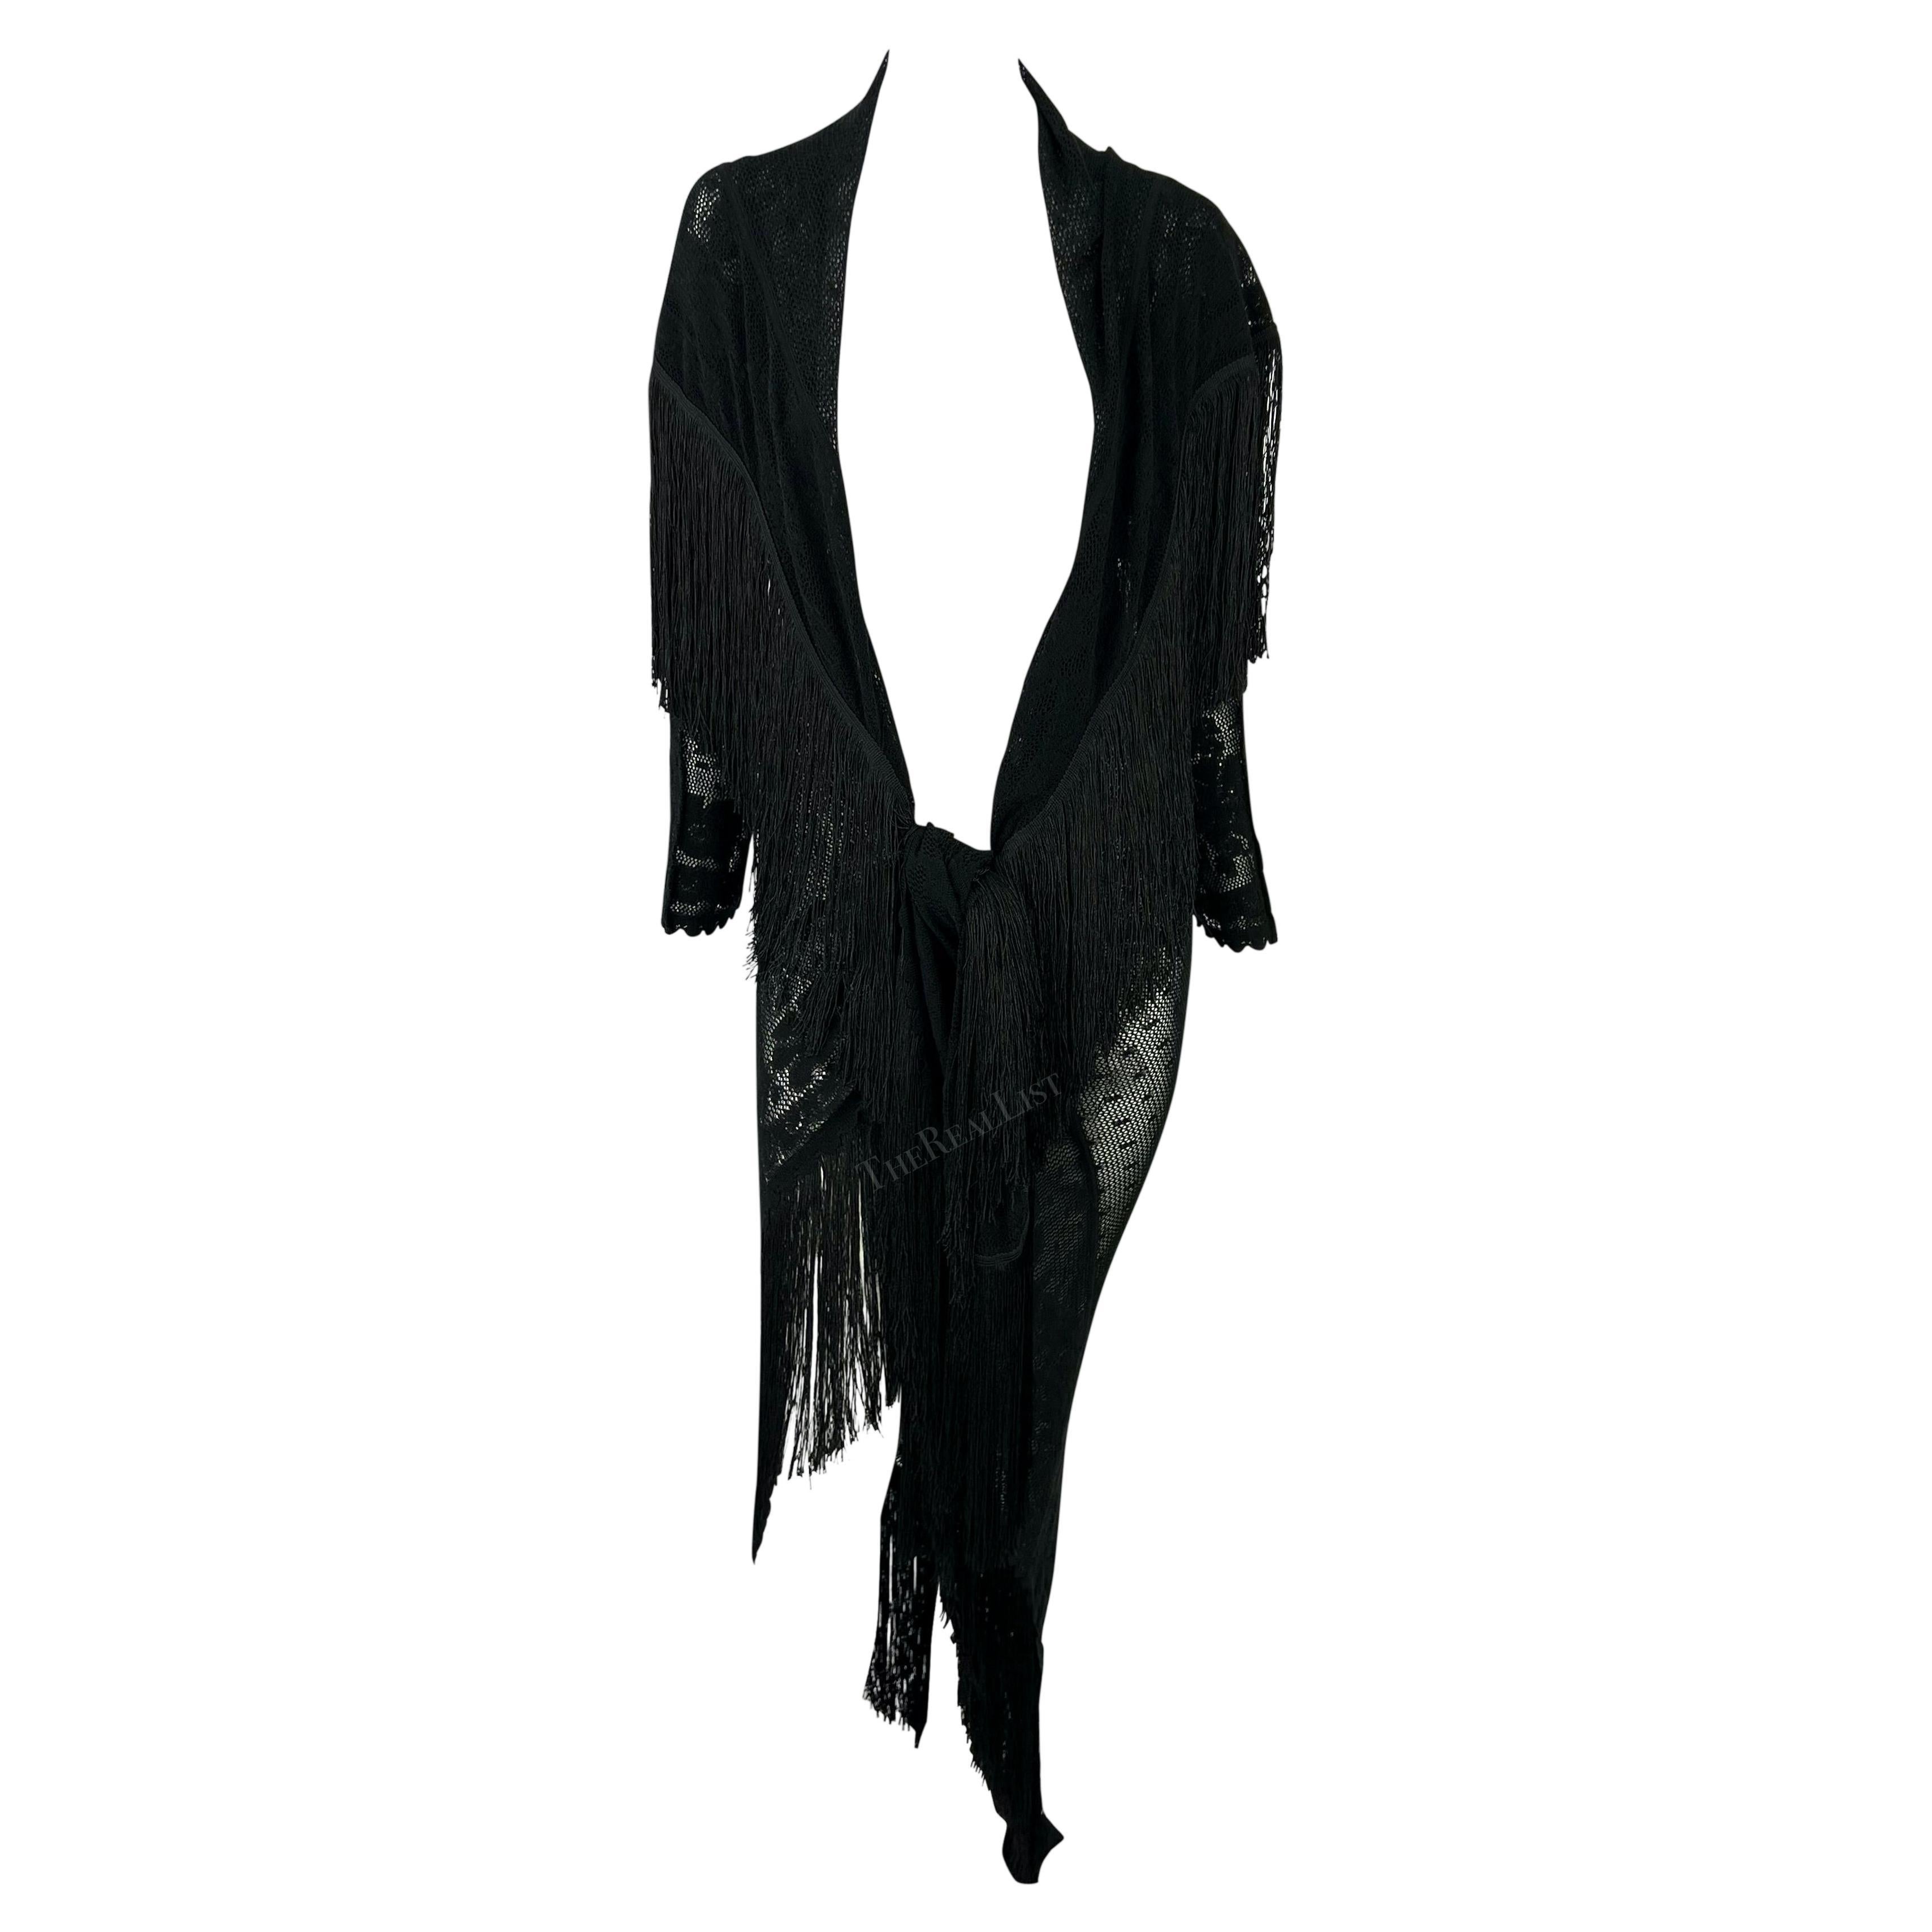 S/S 1997 John Galliano Runway Sheer Black Fringe Lace Flamenco Shawl  For Sale